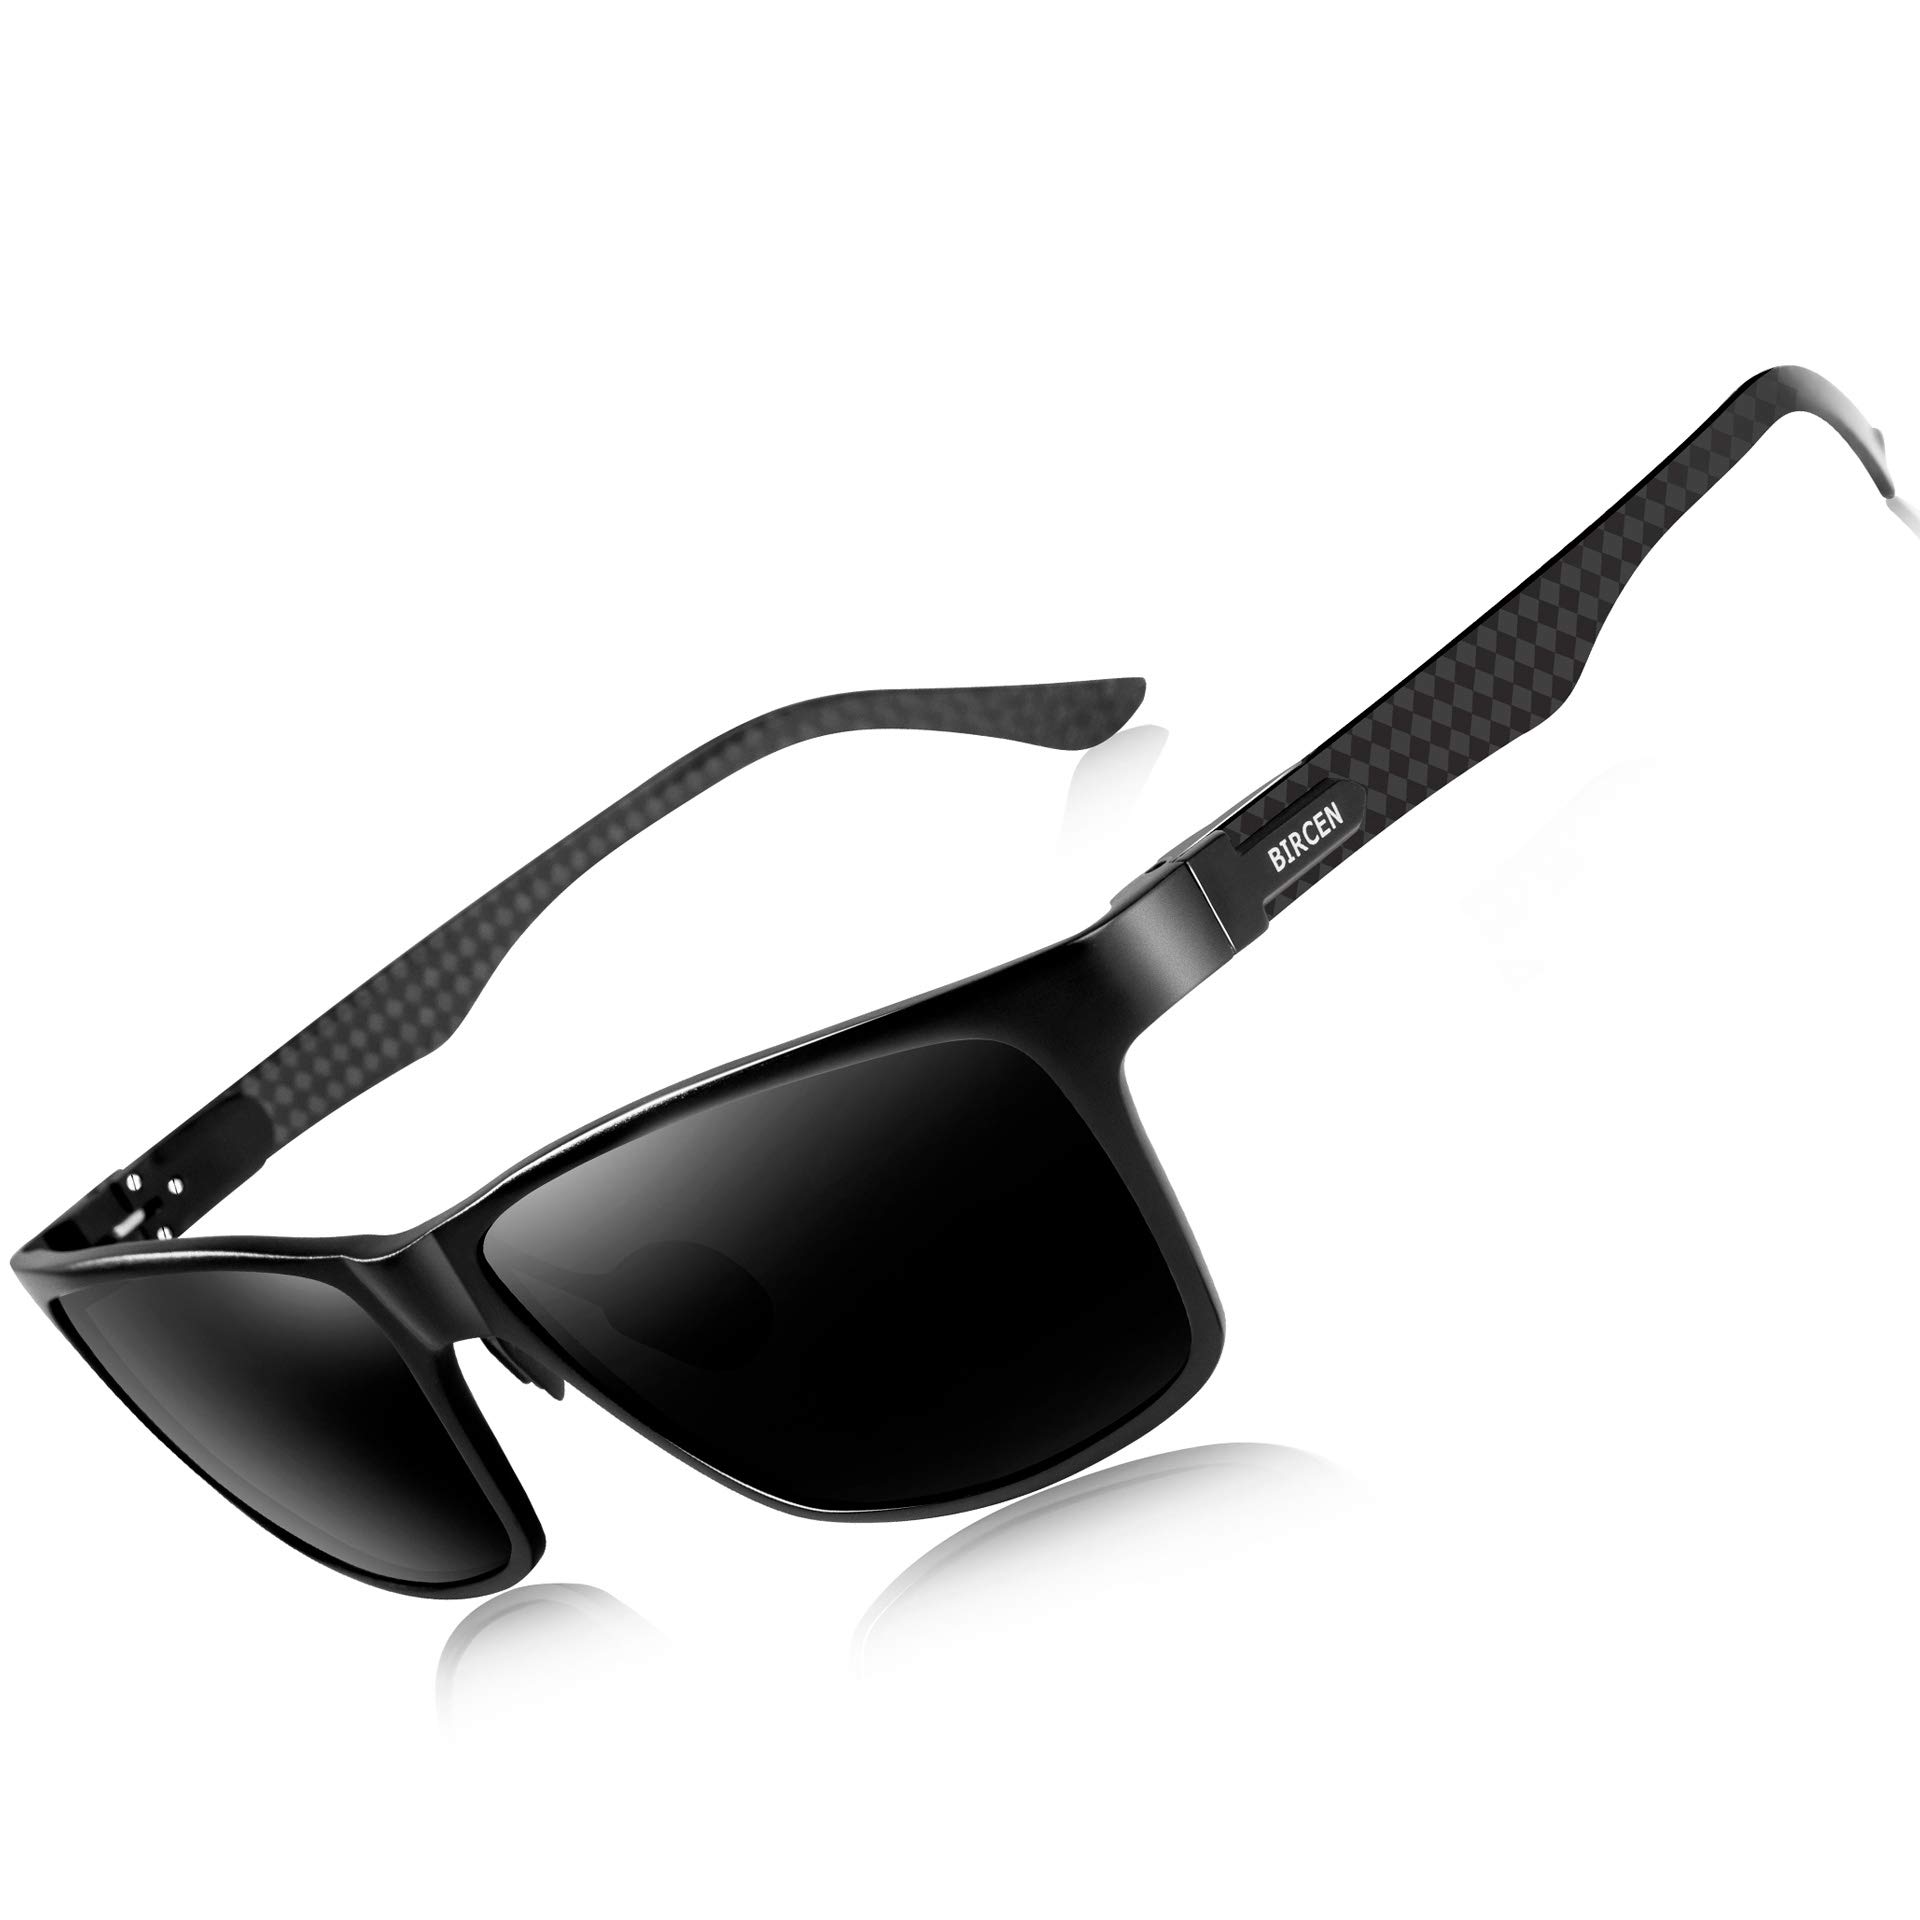 Bircen Men's Carbon Fiber Wayfarer Sunglasses (11 colors) from $14.40-$21.60., Free Shipping w/ Prime or $25+ orders